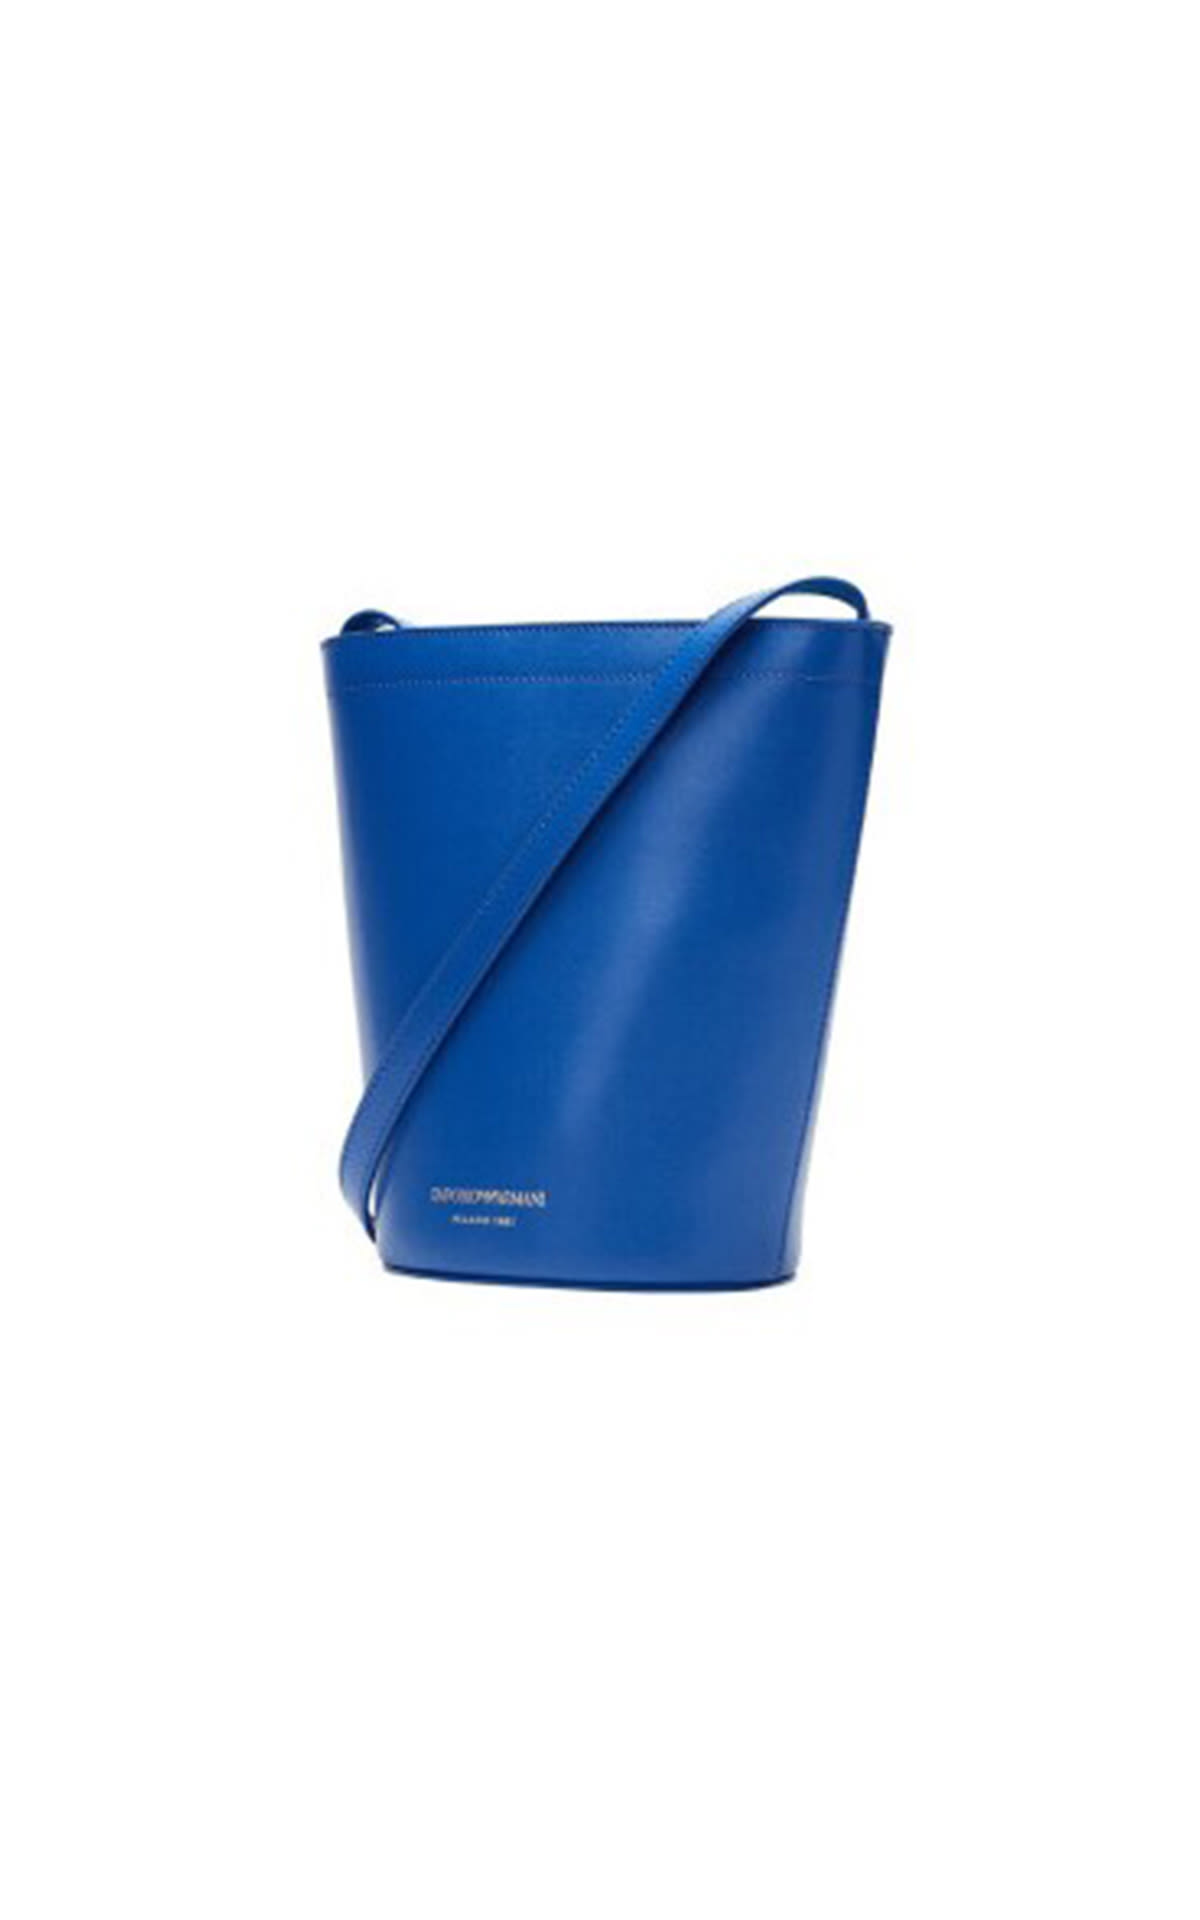 Armani blue bag